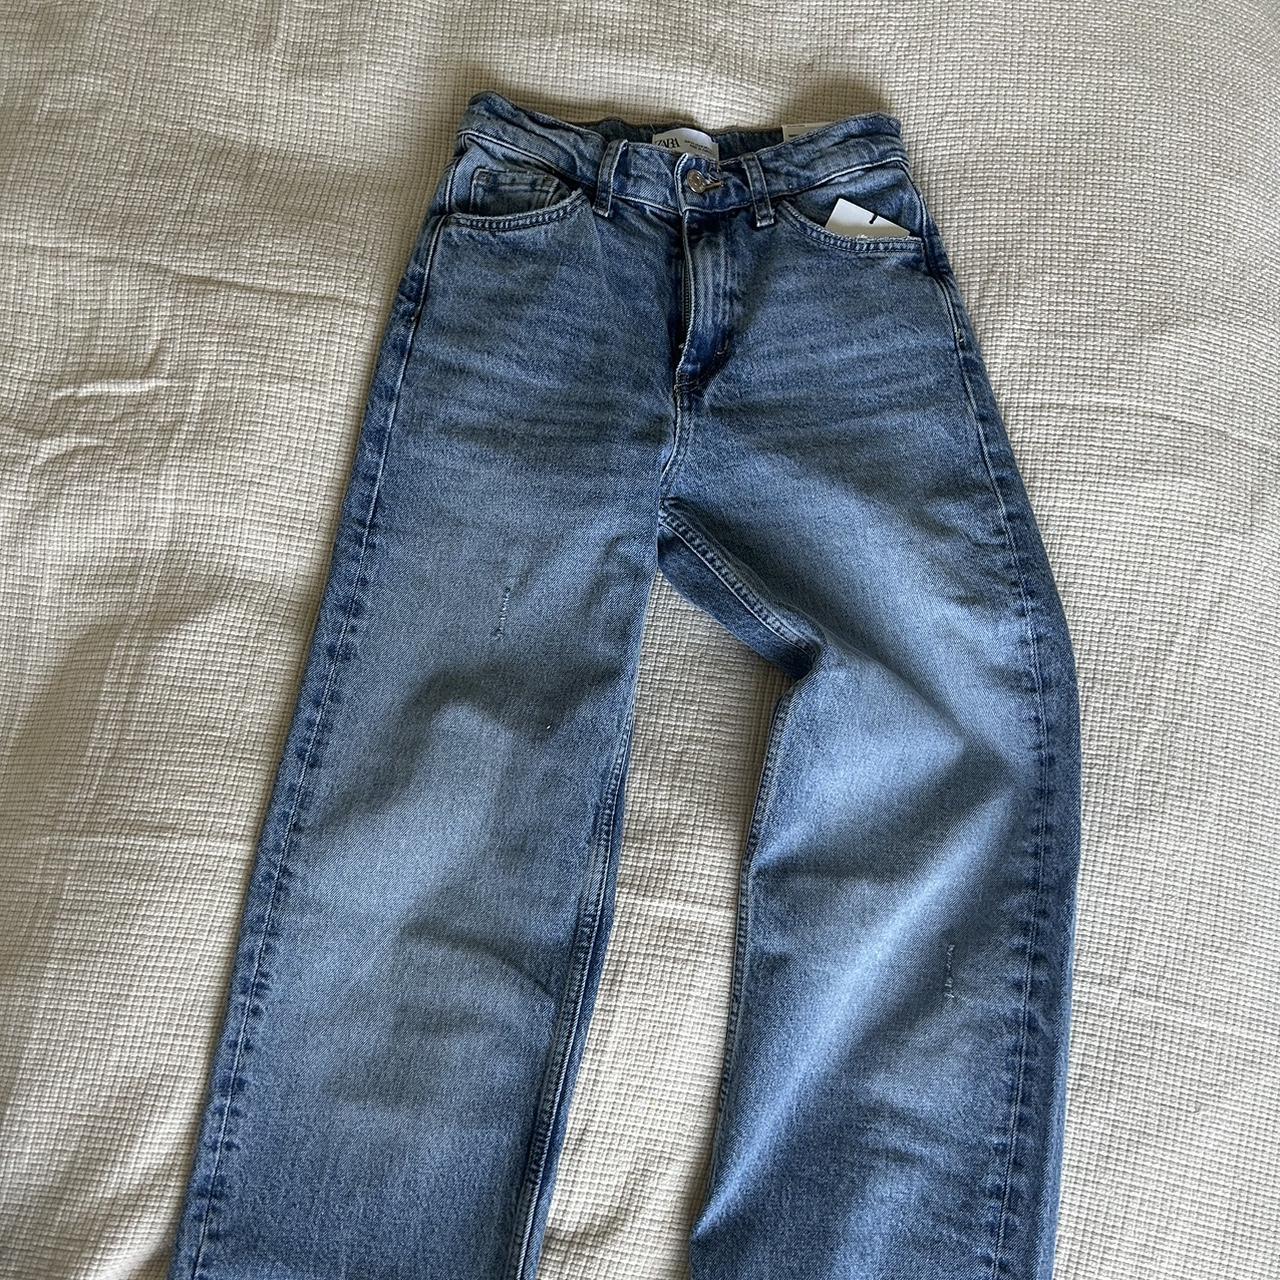 Zara jeans mid/high rise Fits 24 - Depop